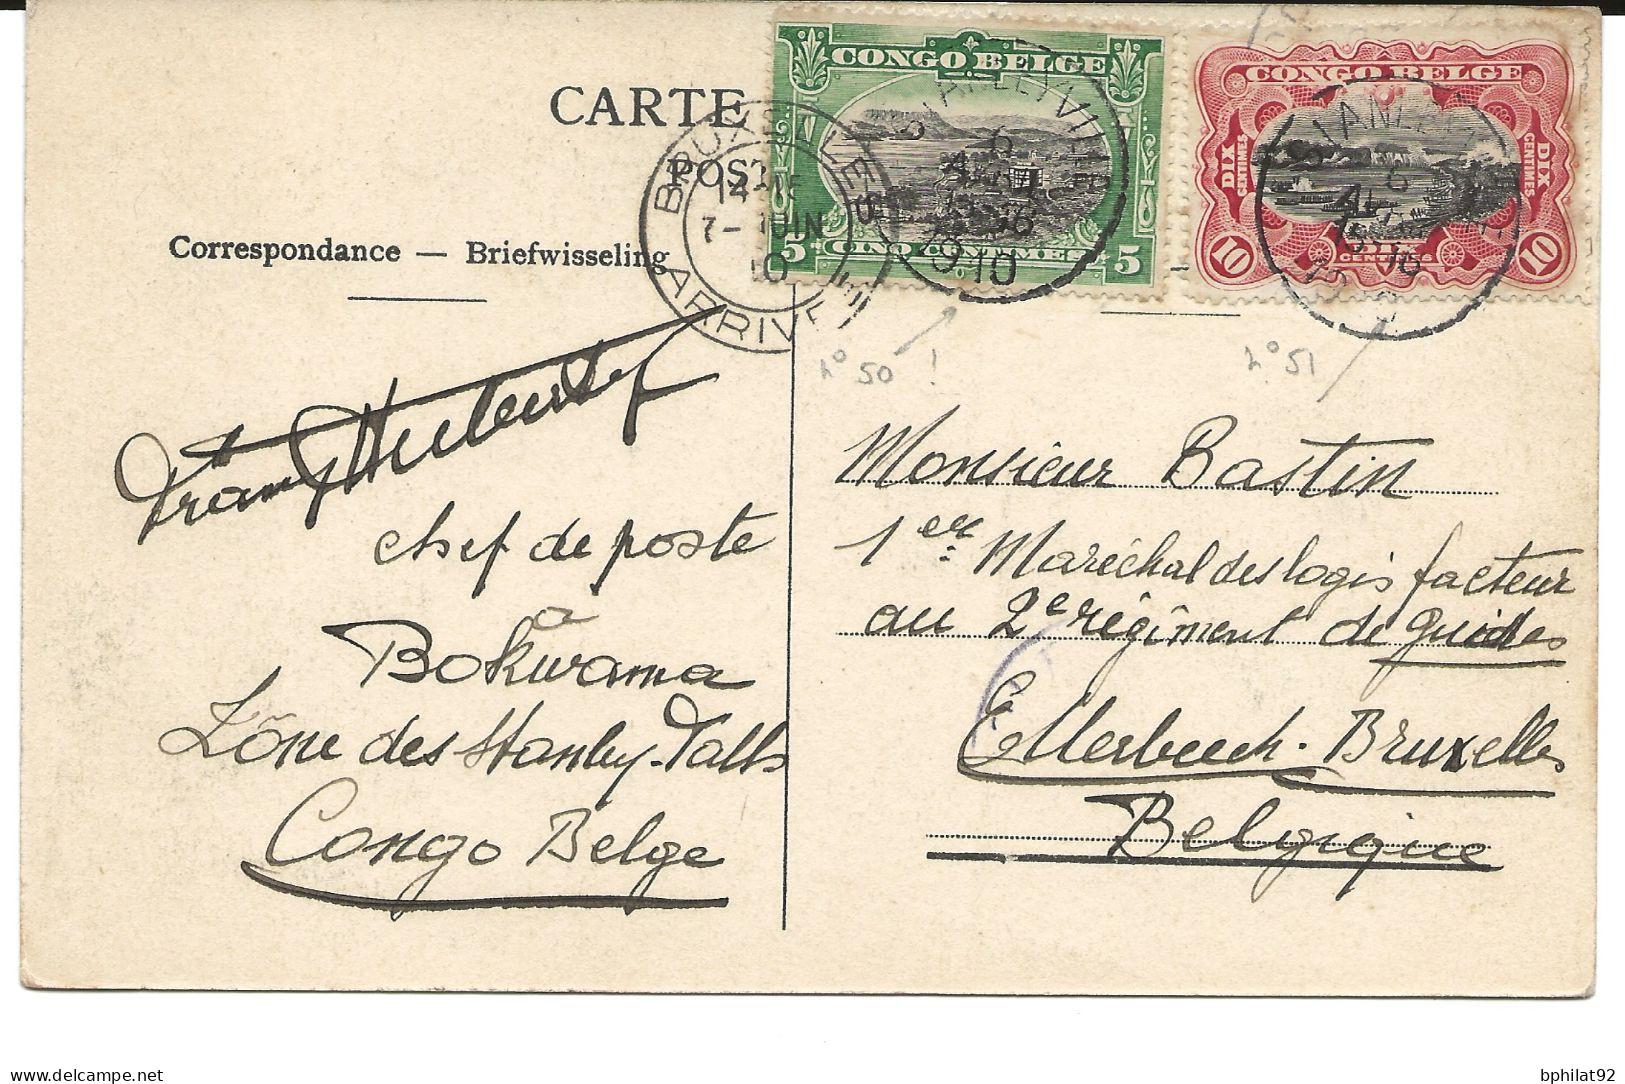 !!! CONGO, CPA DE 1910, DÉPART DE STANLEYVILLE POUR BRUXELLES (BELGIQUE) - Cartas & Documentos